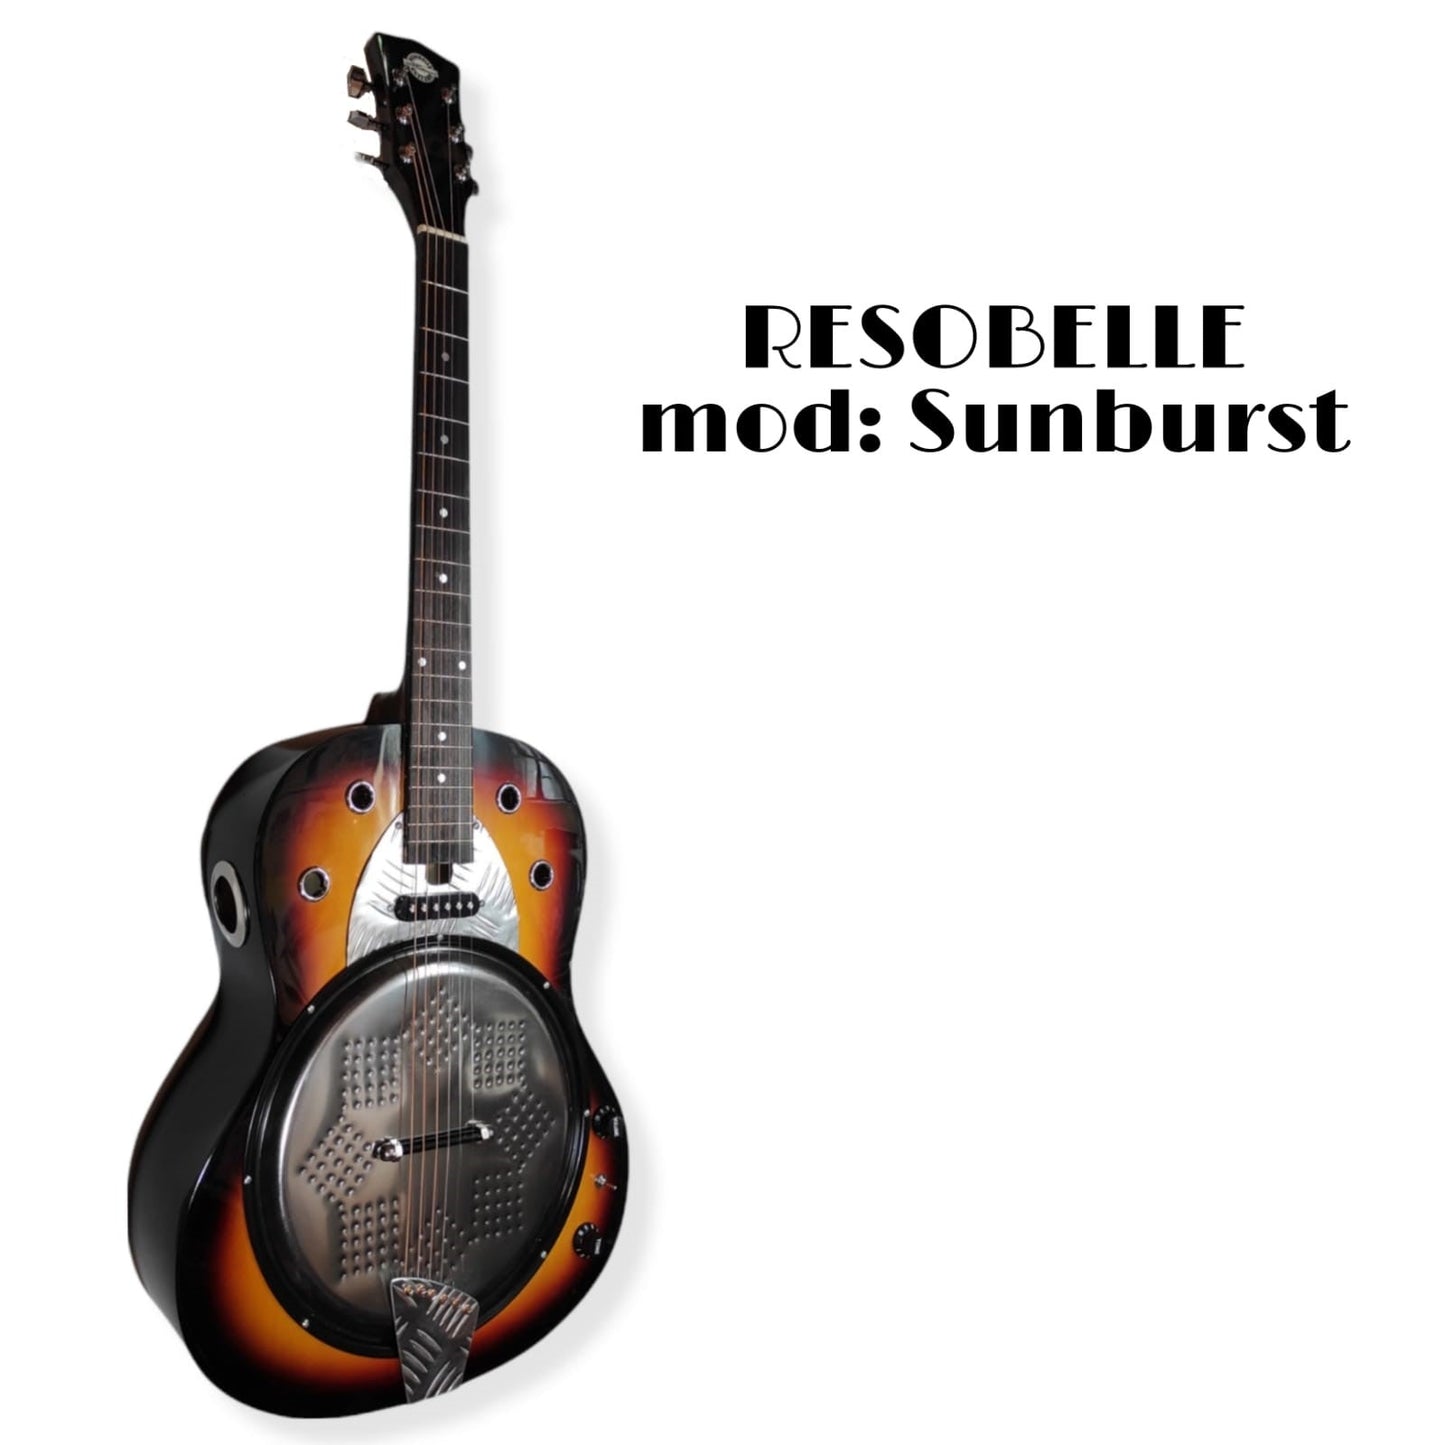 Resobelle effe Sunburst acustic guitar